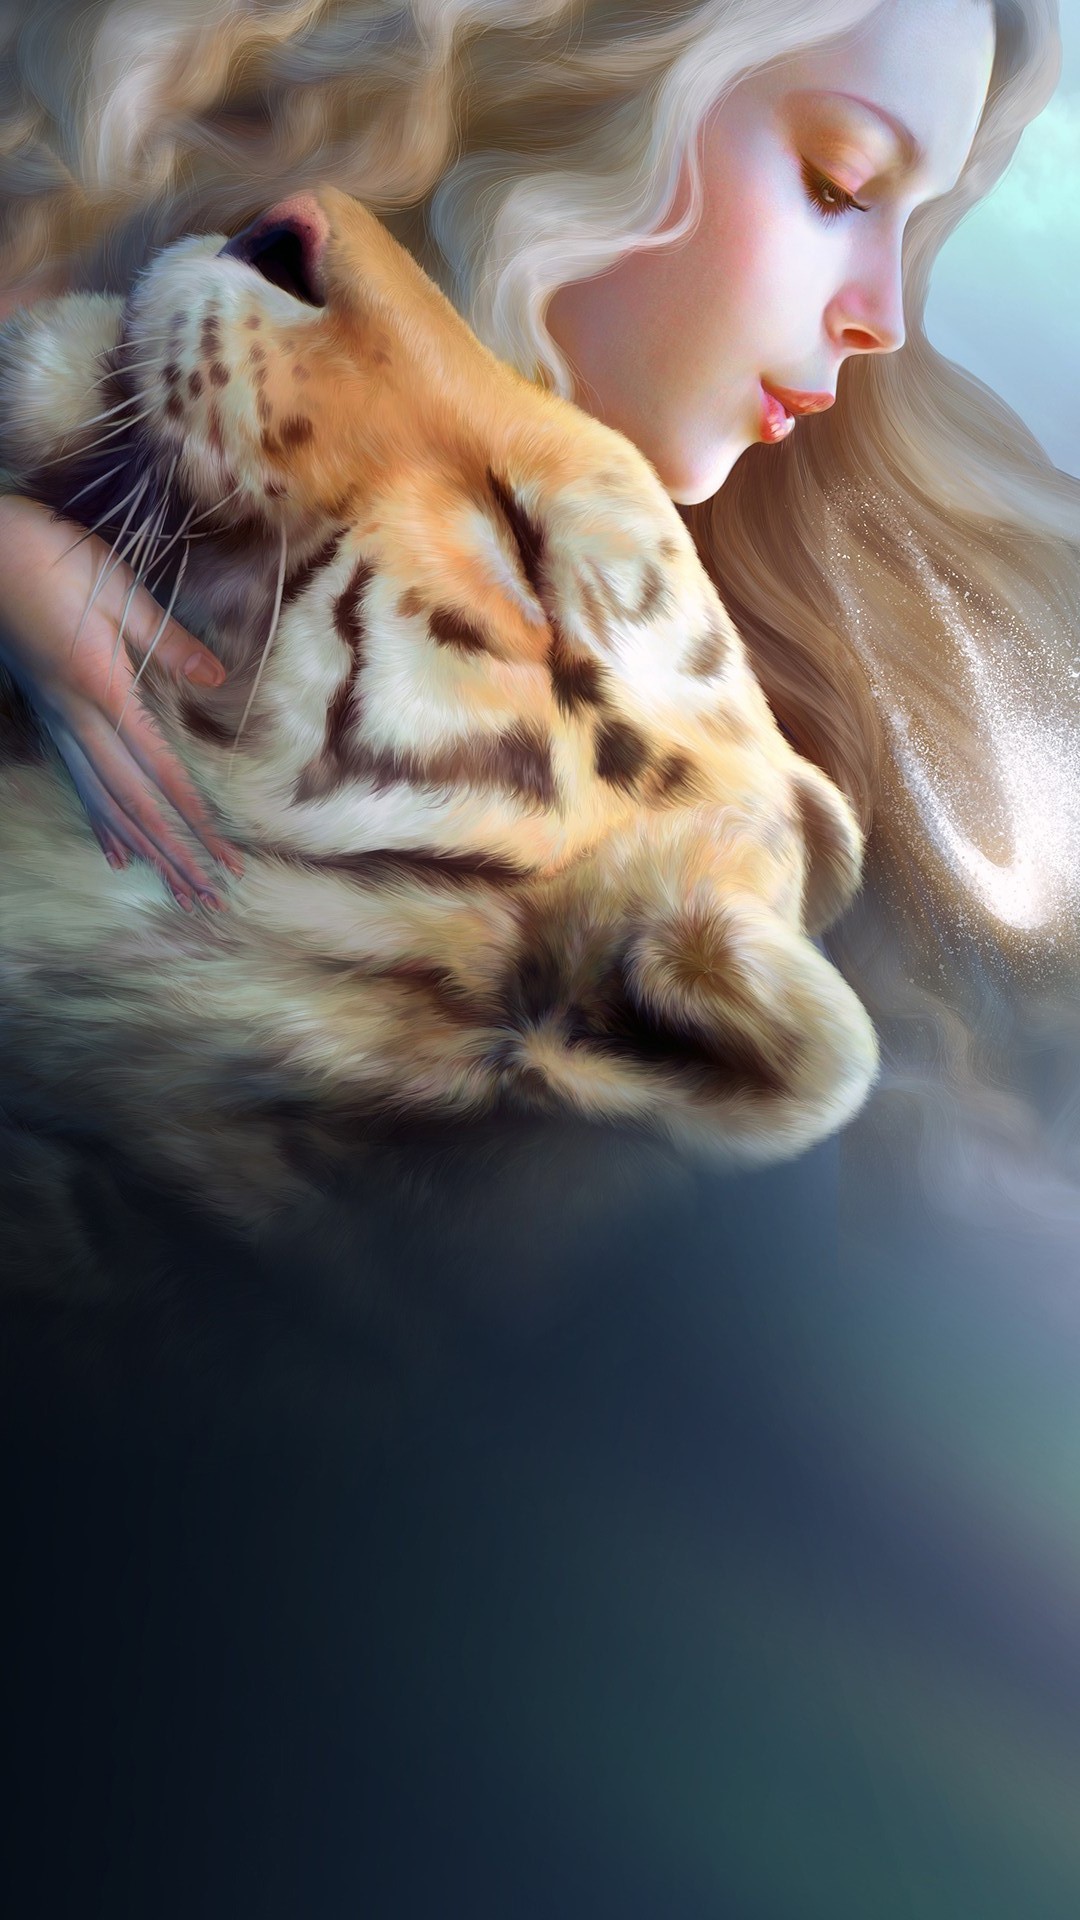 Digital Art Women and Tiger Wallpaper iPhone resolution 1080x1920